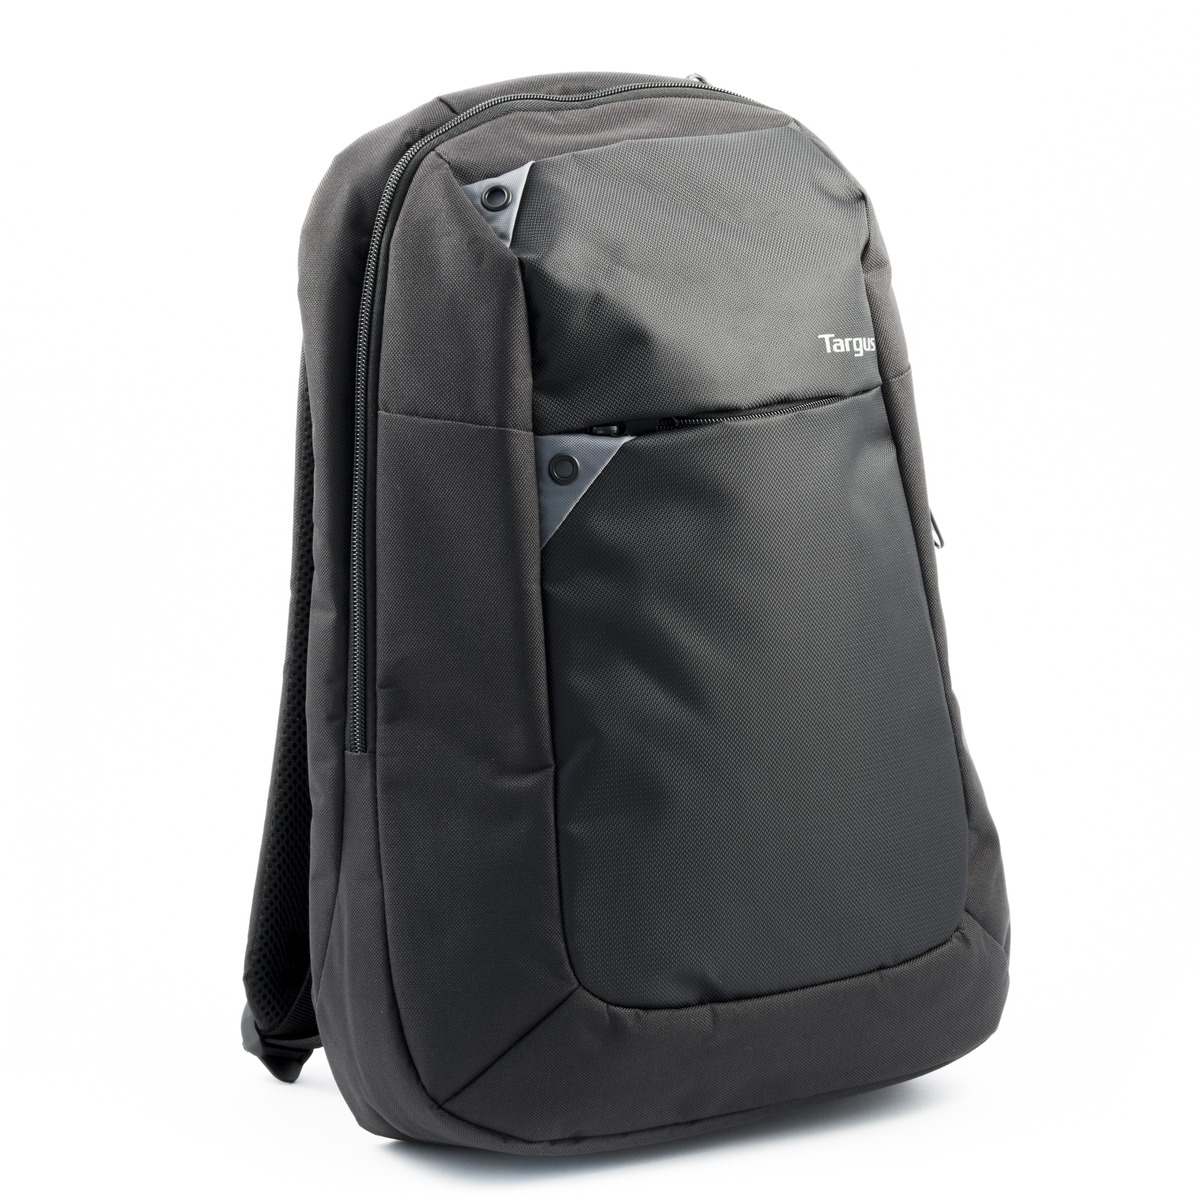 – best4you Targus Intellect Black Backpack 15.6″ Laptop